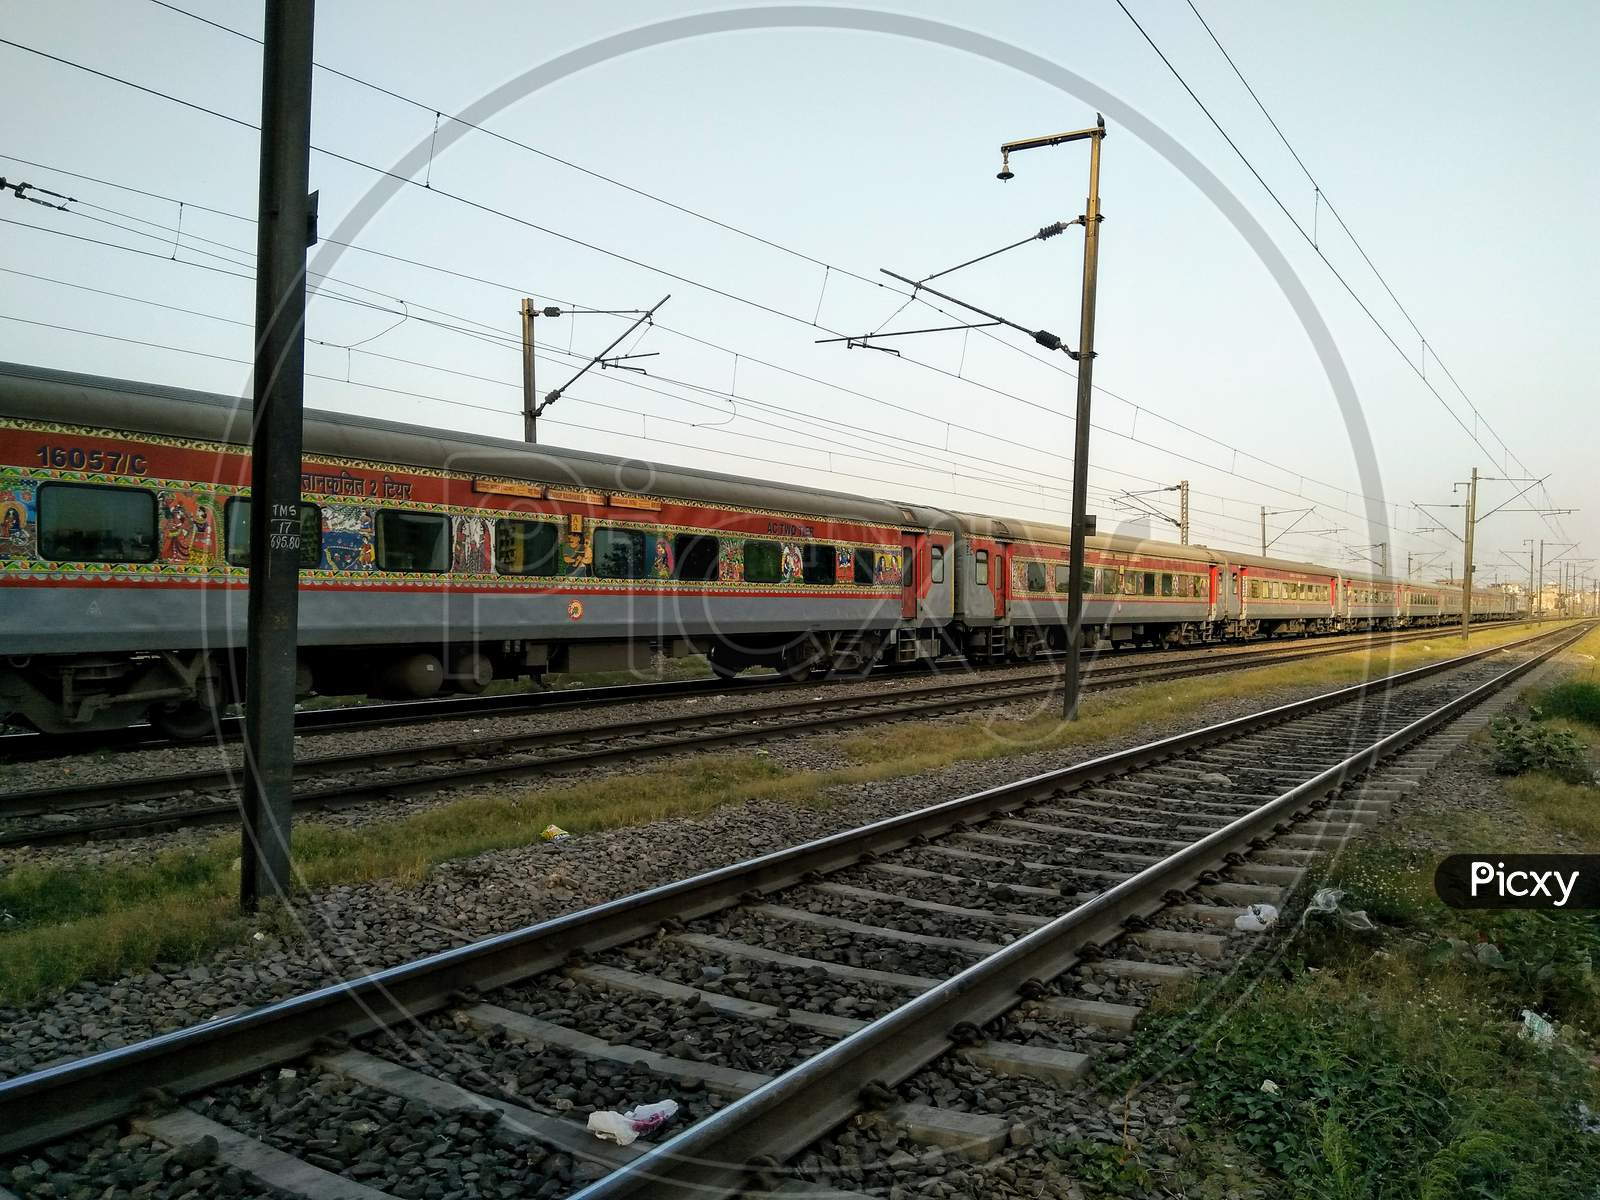 Railway track And train On track